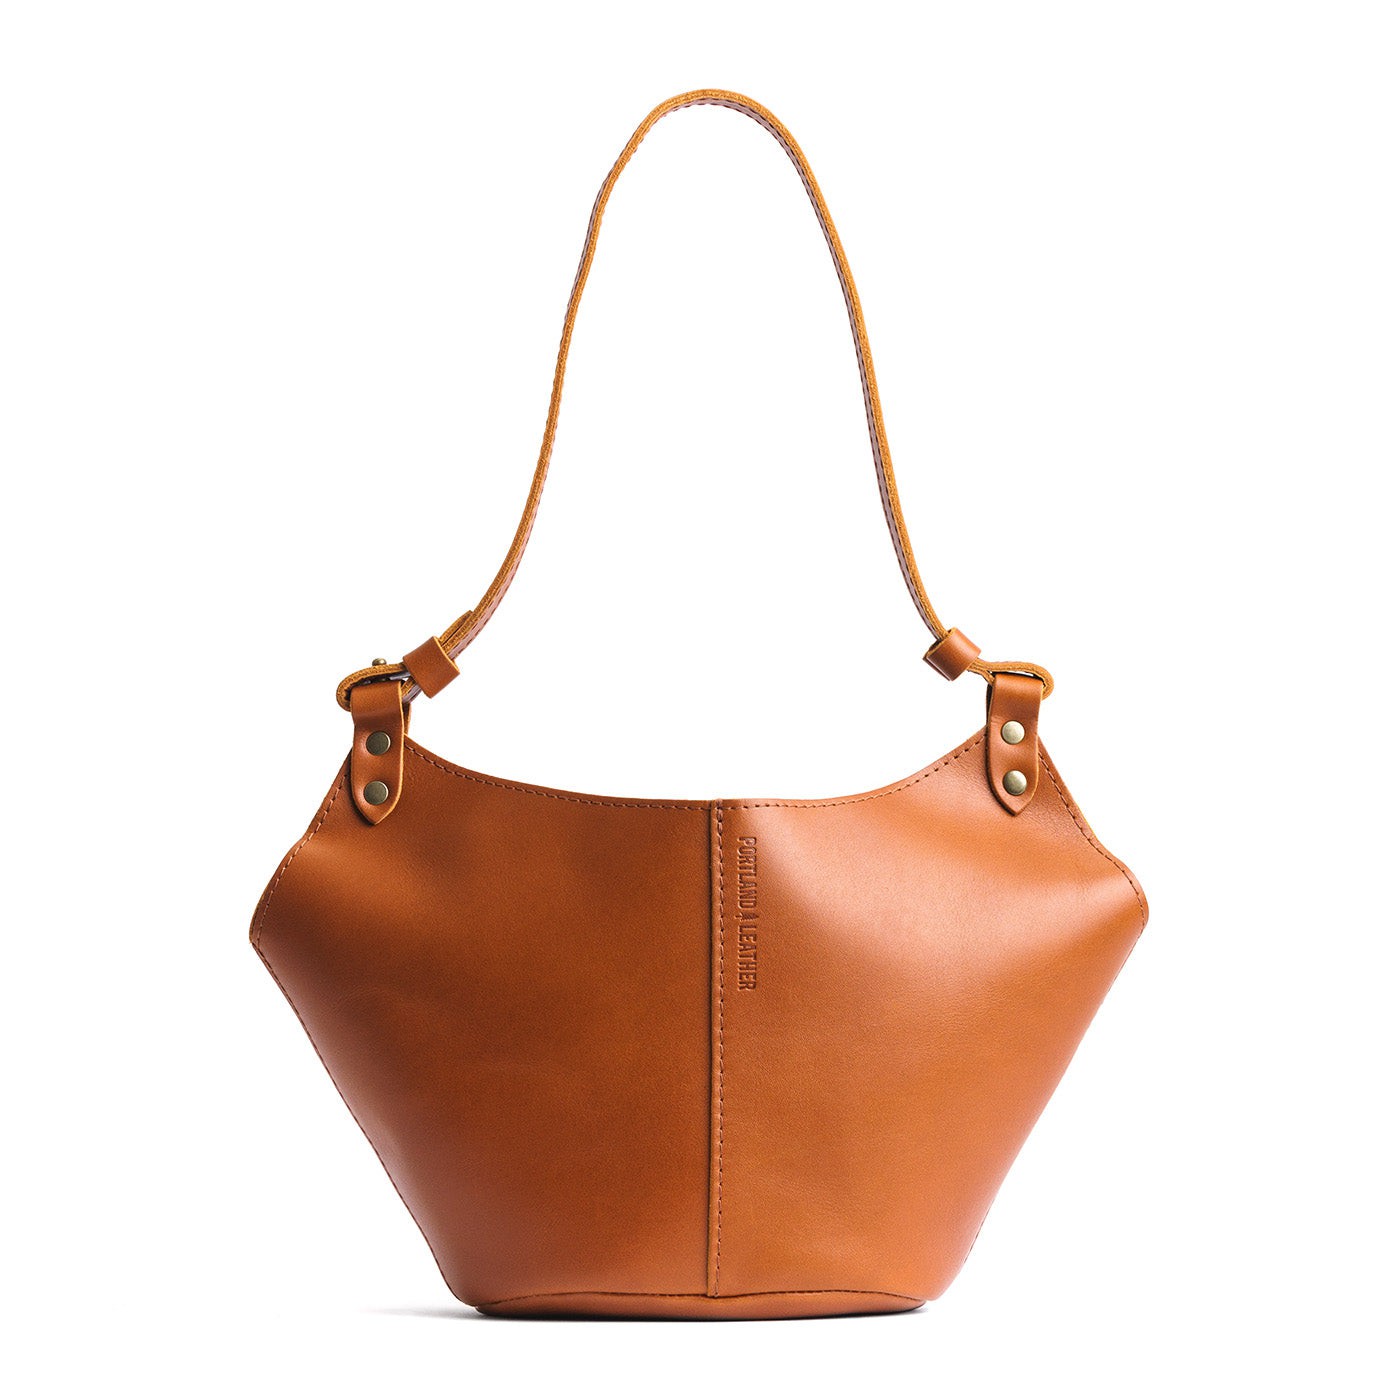 Honey*Small | Structured bucket shaped handbag with an adjustable shoulder strap